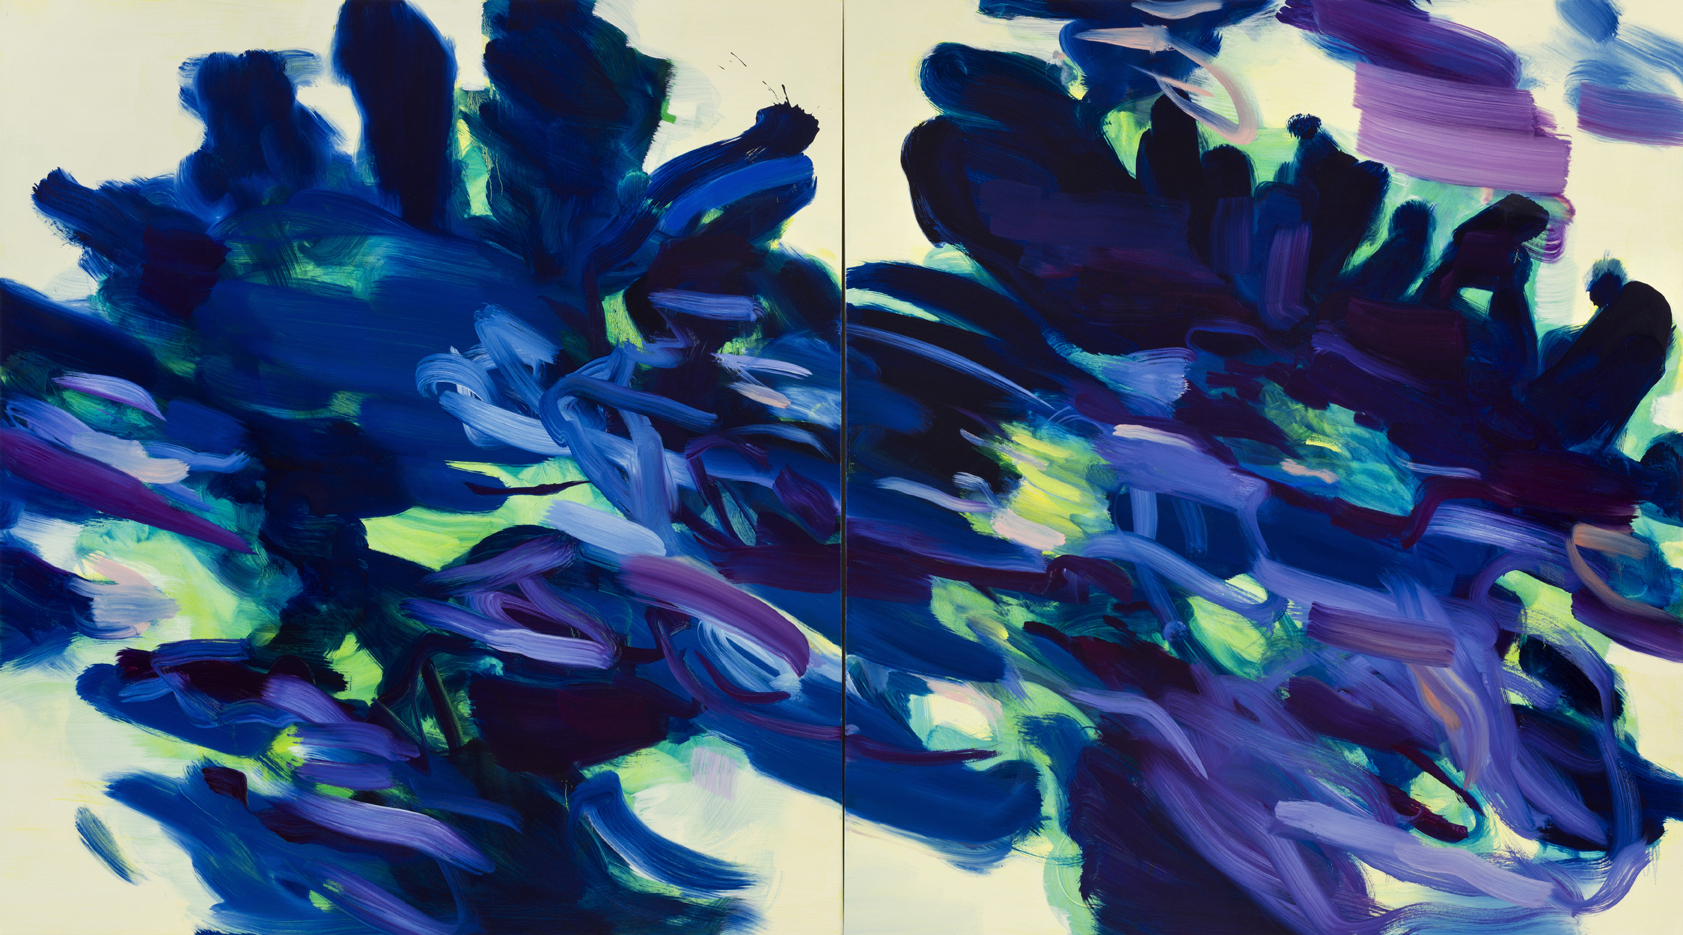  Unfurling  (Delft Blue)  2018  Oil on canvas  127 x 229cm  (Diptych) 